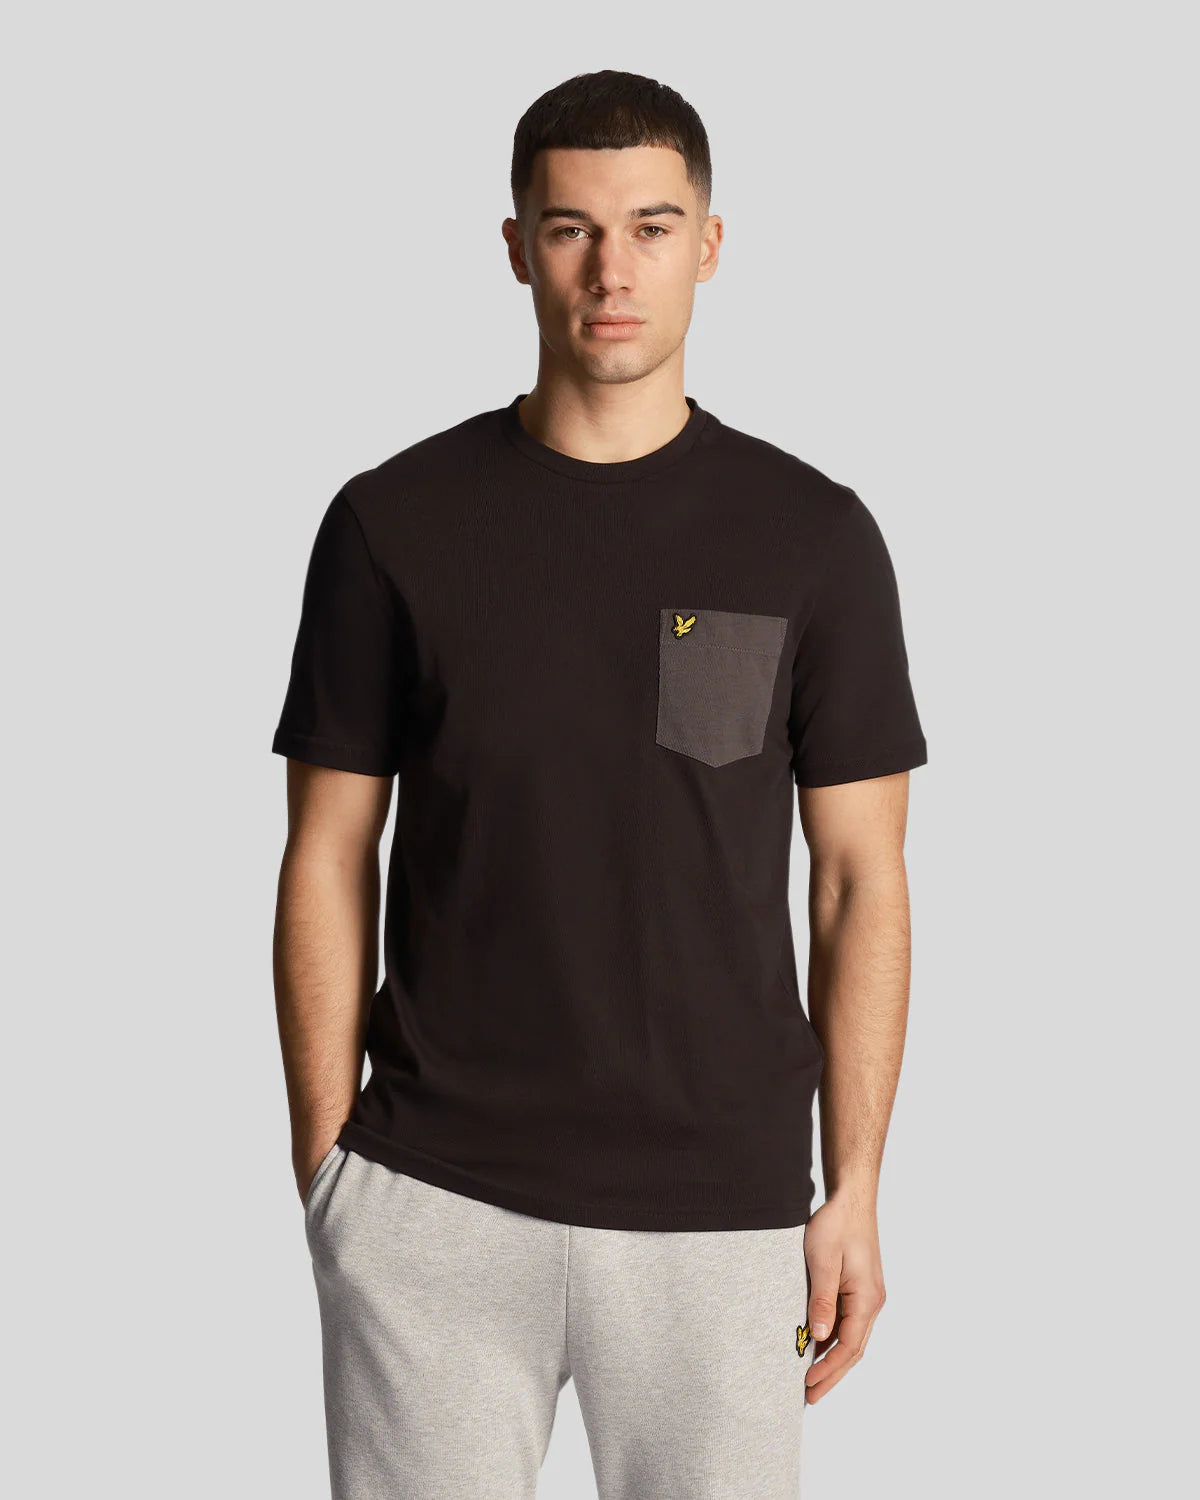 Lyle & Ccott uomo Contrast Pocket t-shirt TS831VOG X176